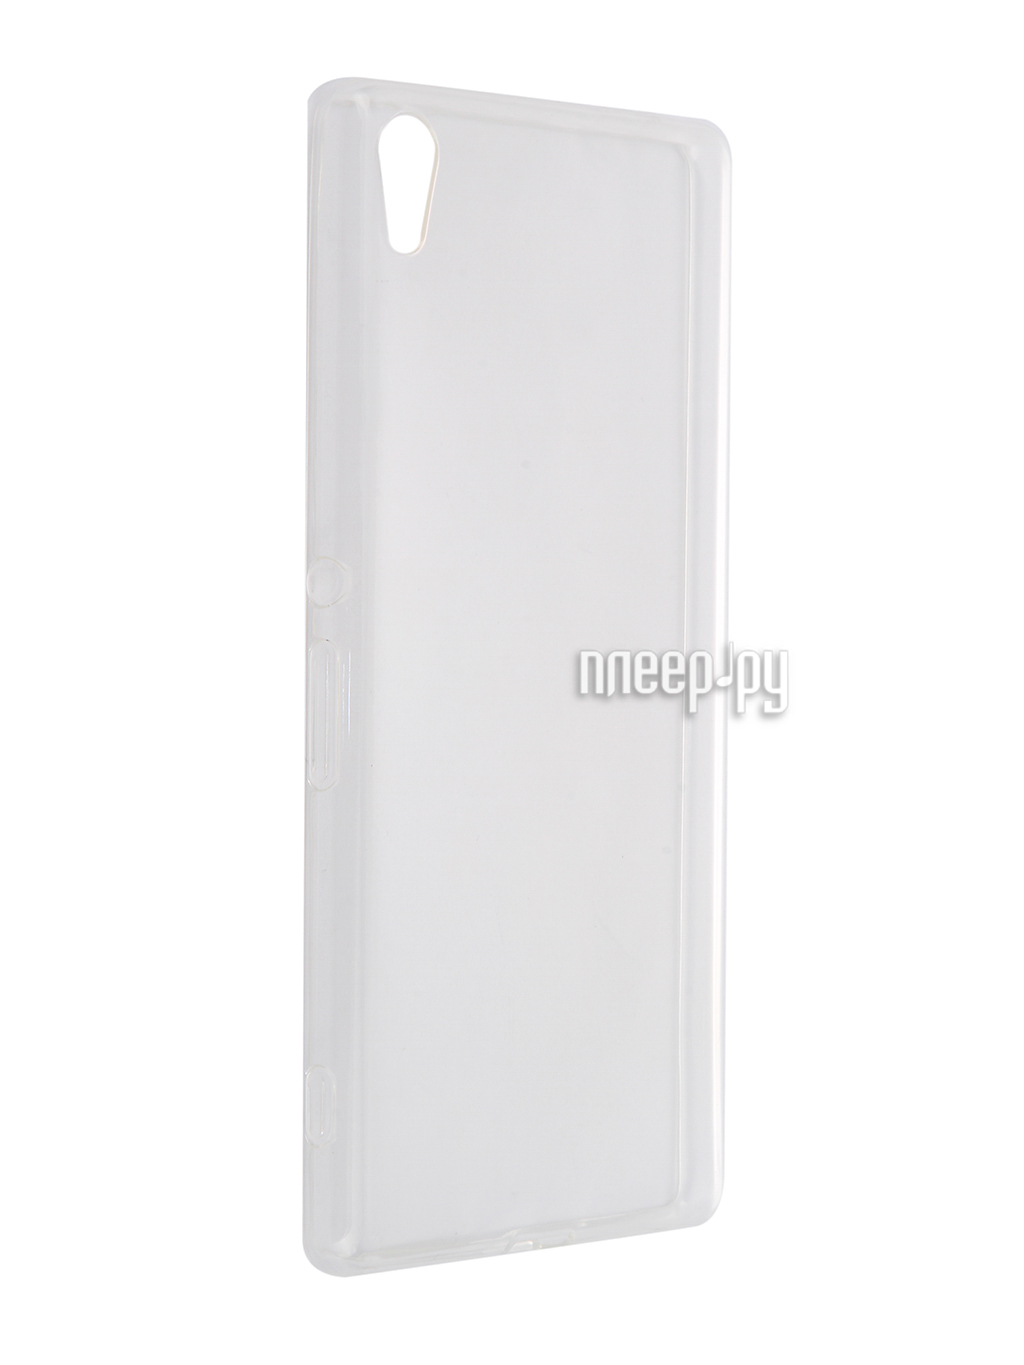  - Sony Xperia XA Ultra Gecko  Transparent White S-G-SONXAU-WH  609 